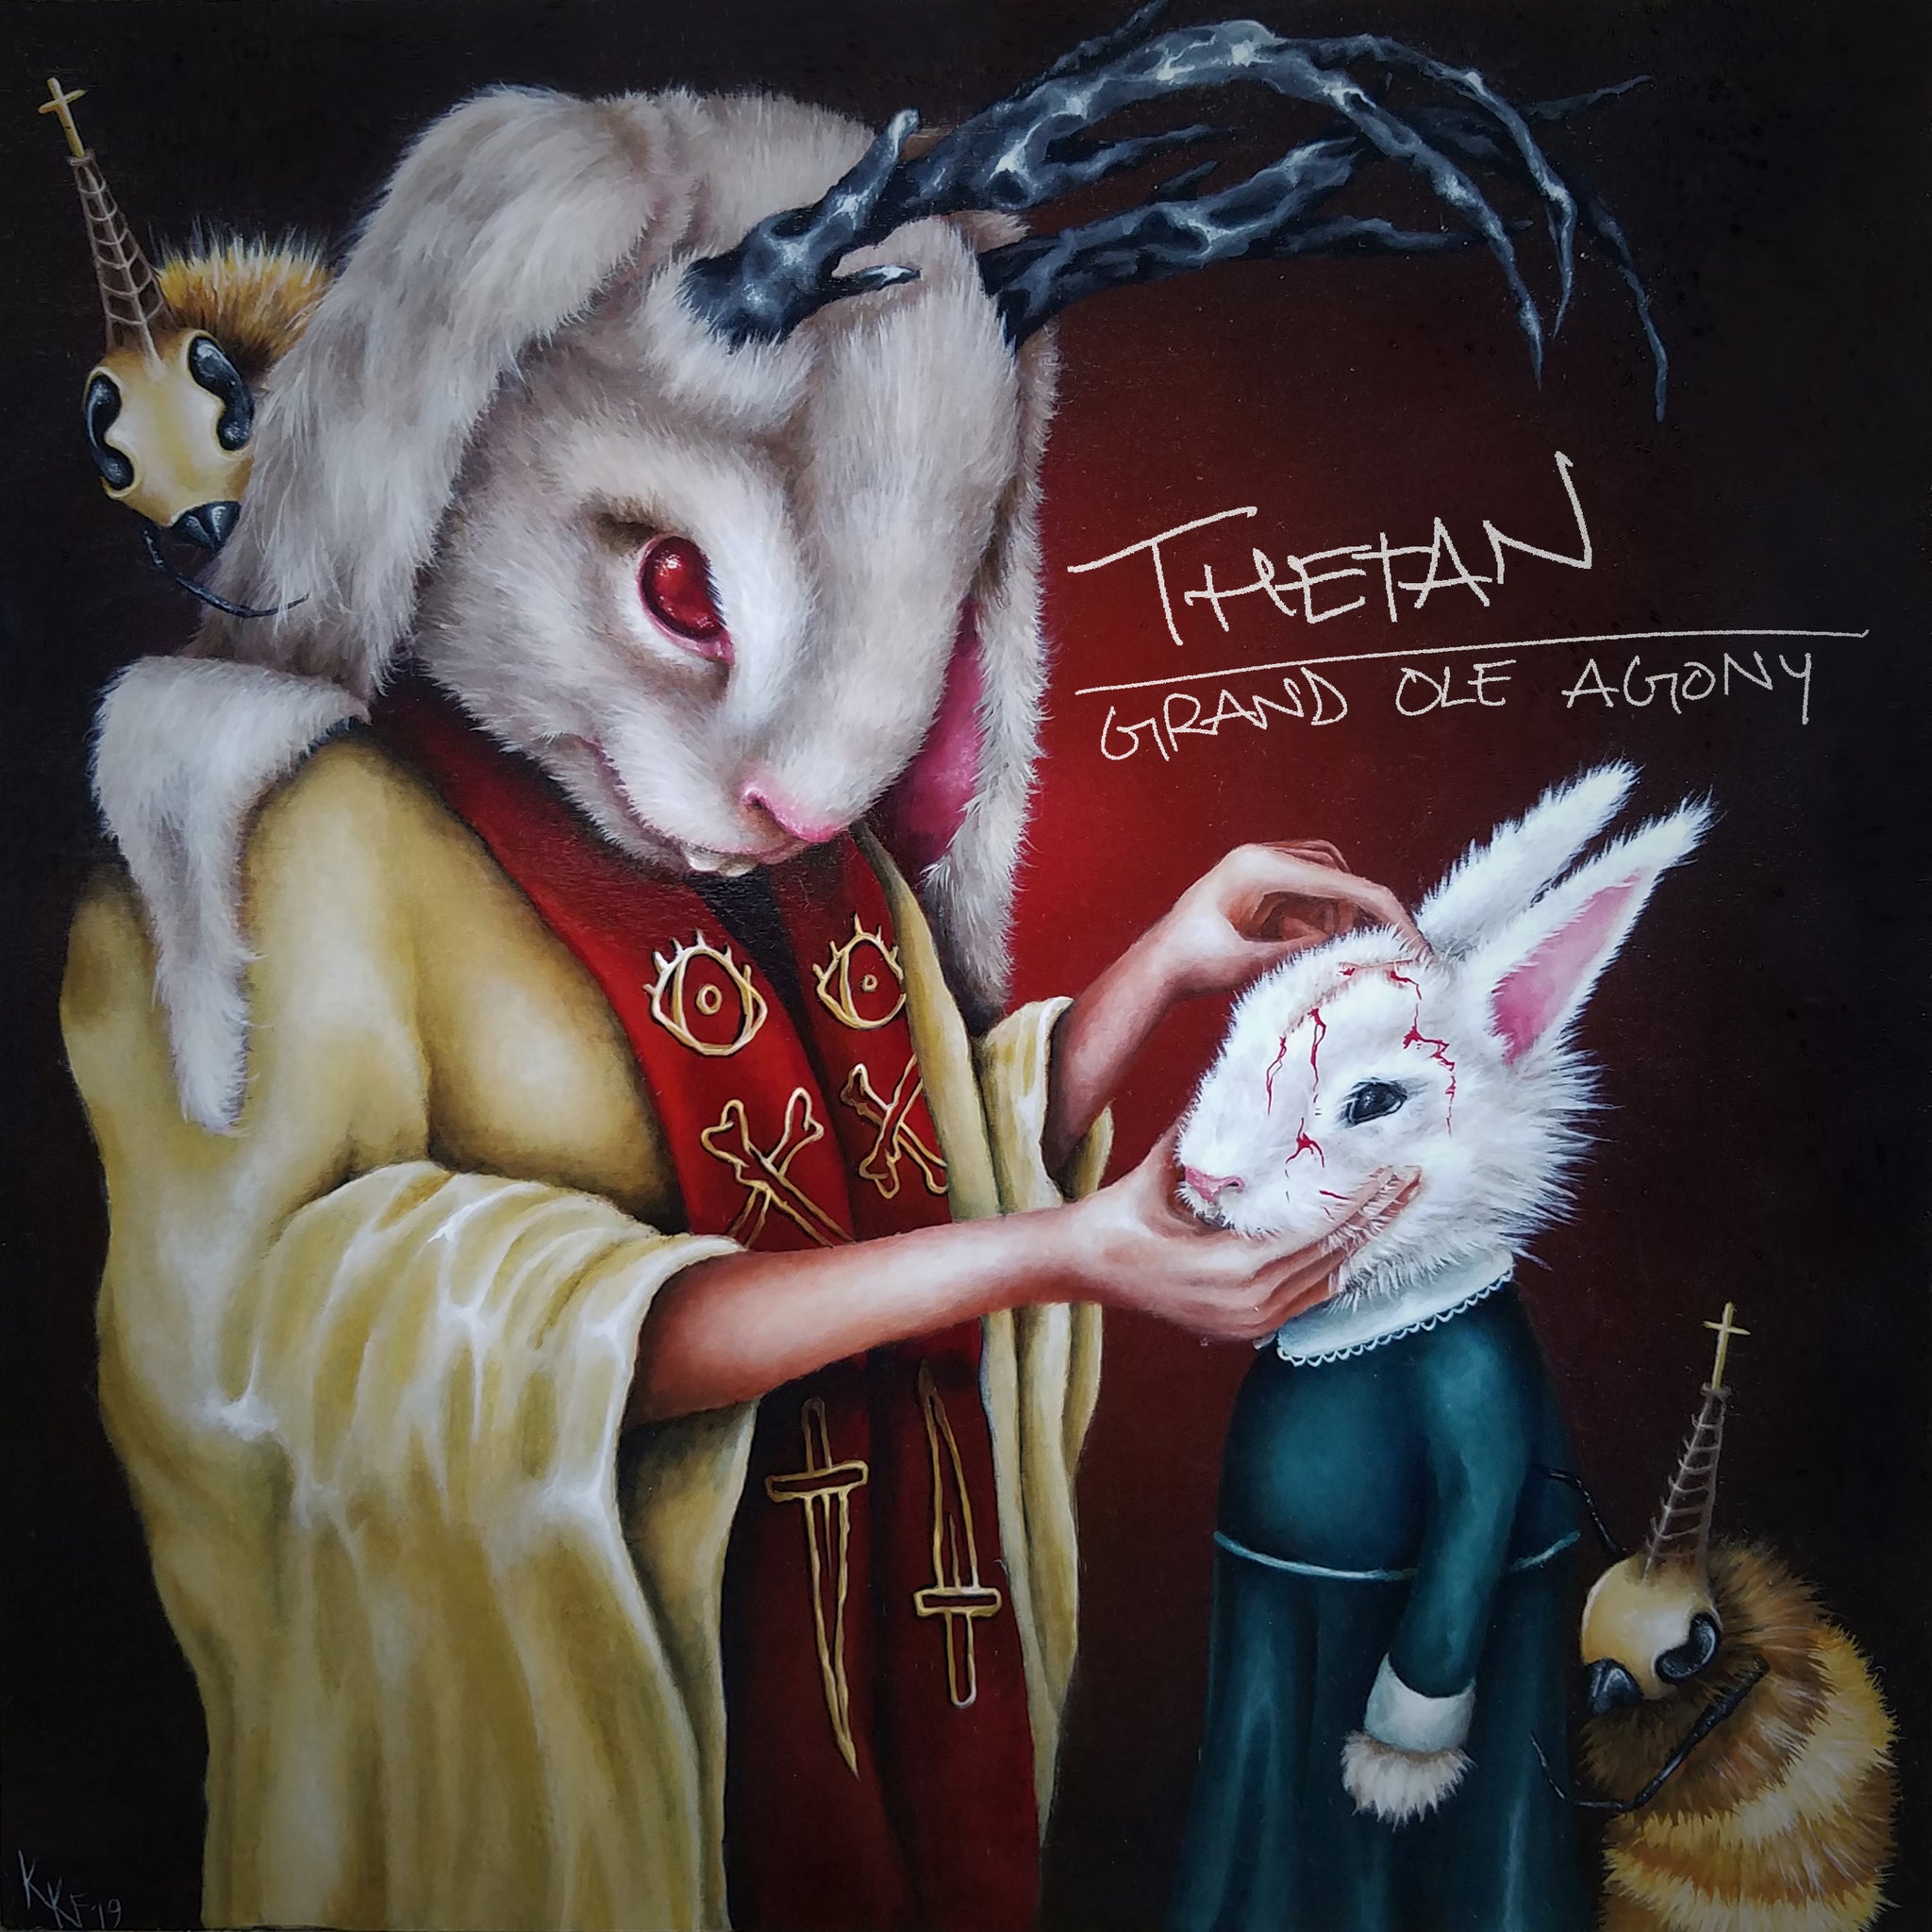 ALBUM: Thetan - Grand Ole Agony (CD/VINYL LP)